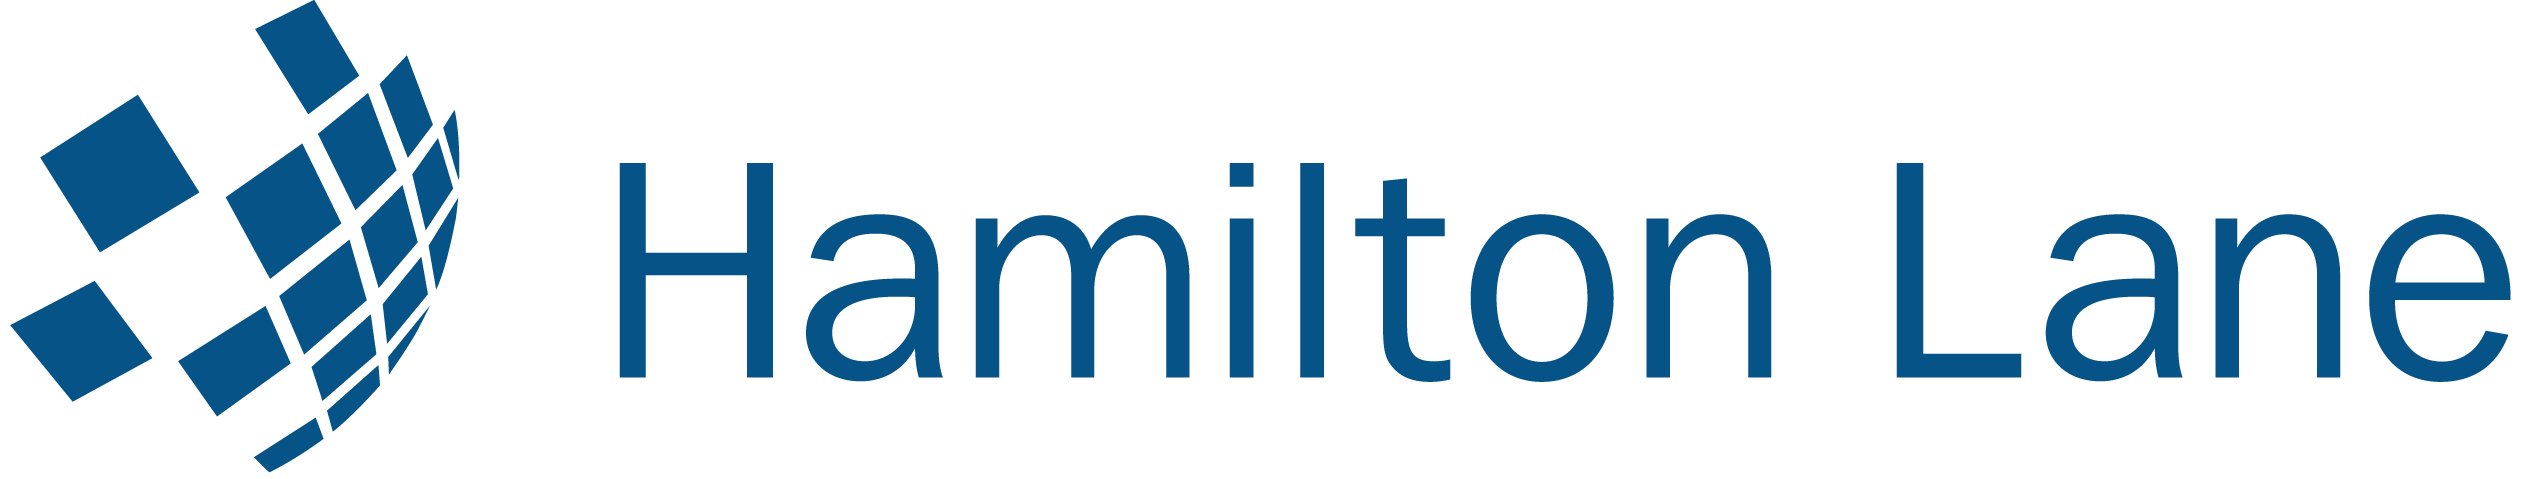 Hamilton Lane Incorporated logo